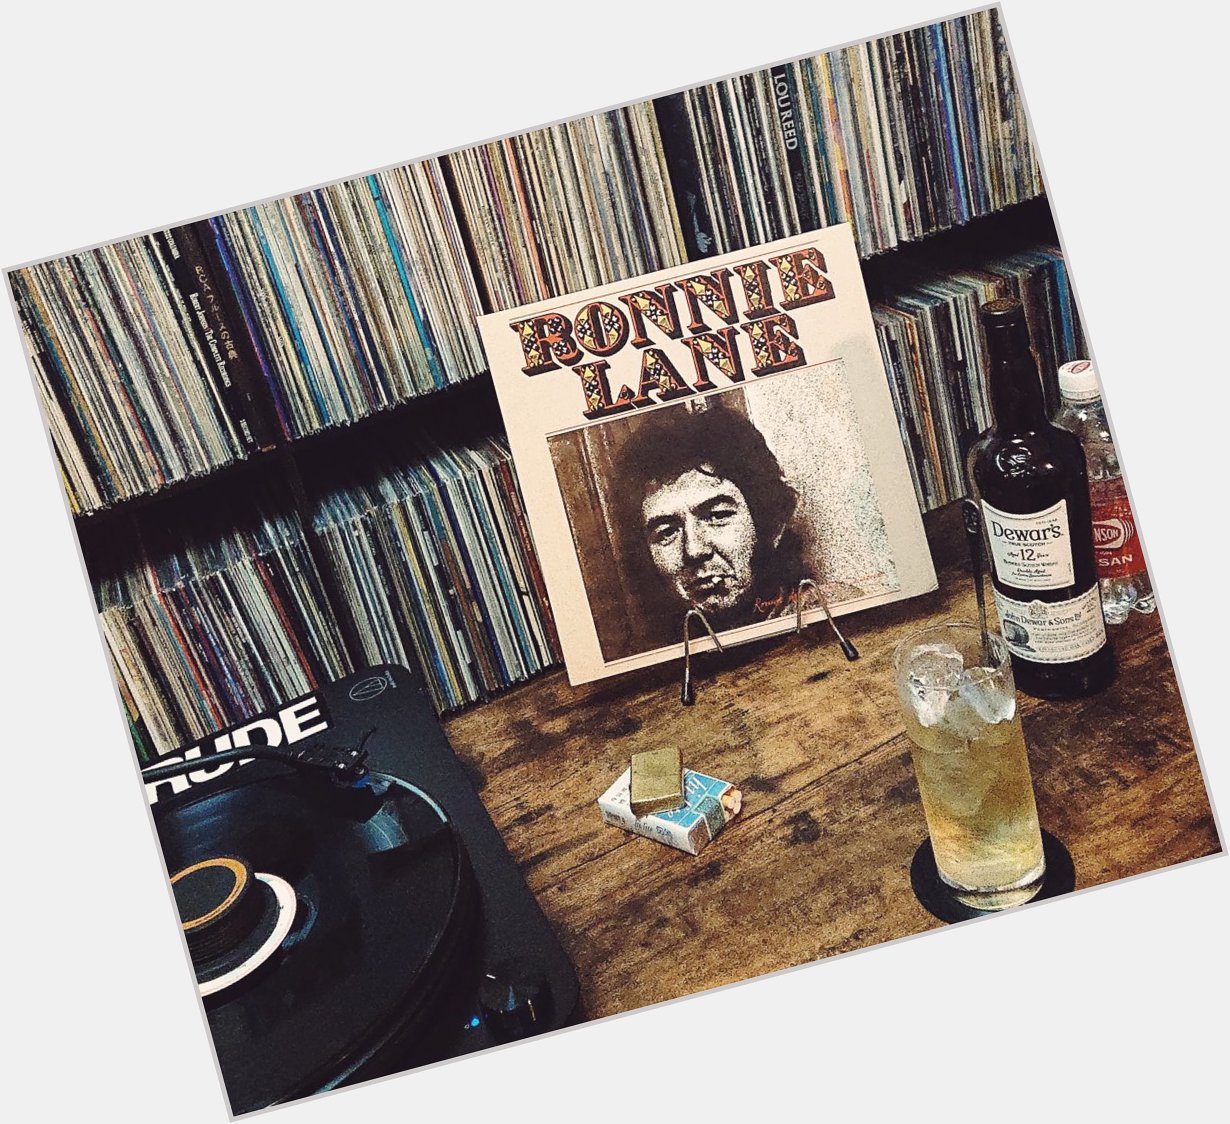        Happy Birthday Ronnie Lane    (*   ) Ronnie Lane\s Slim Chance 